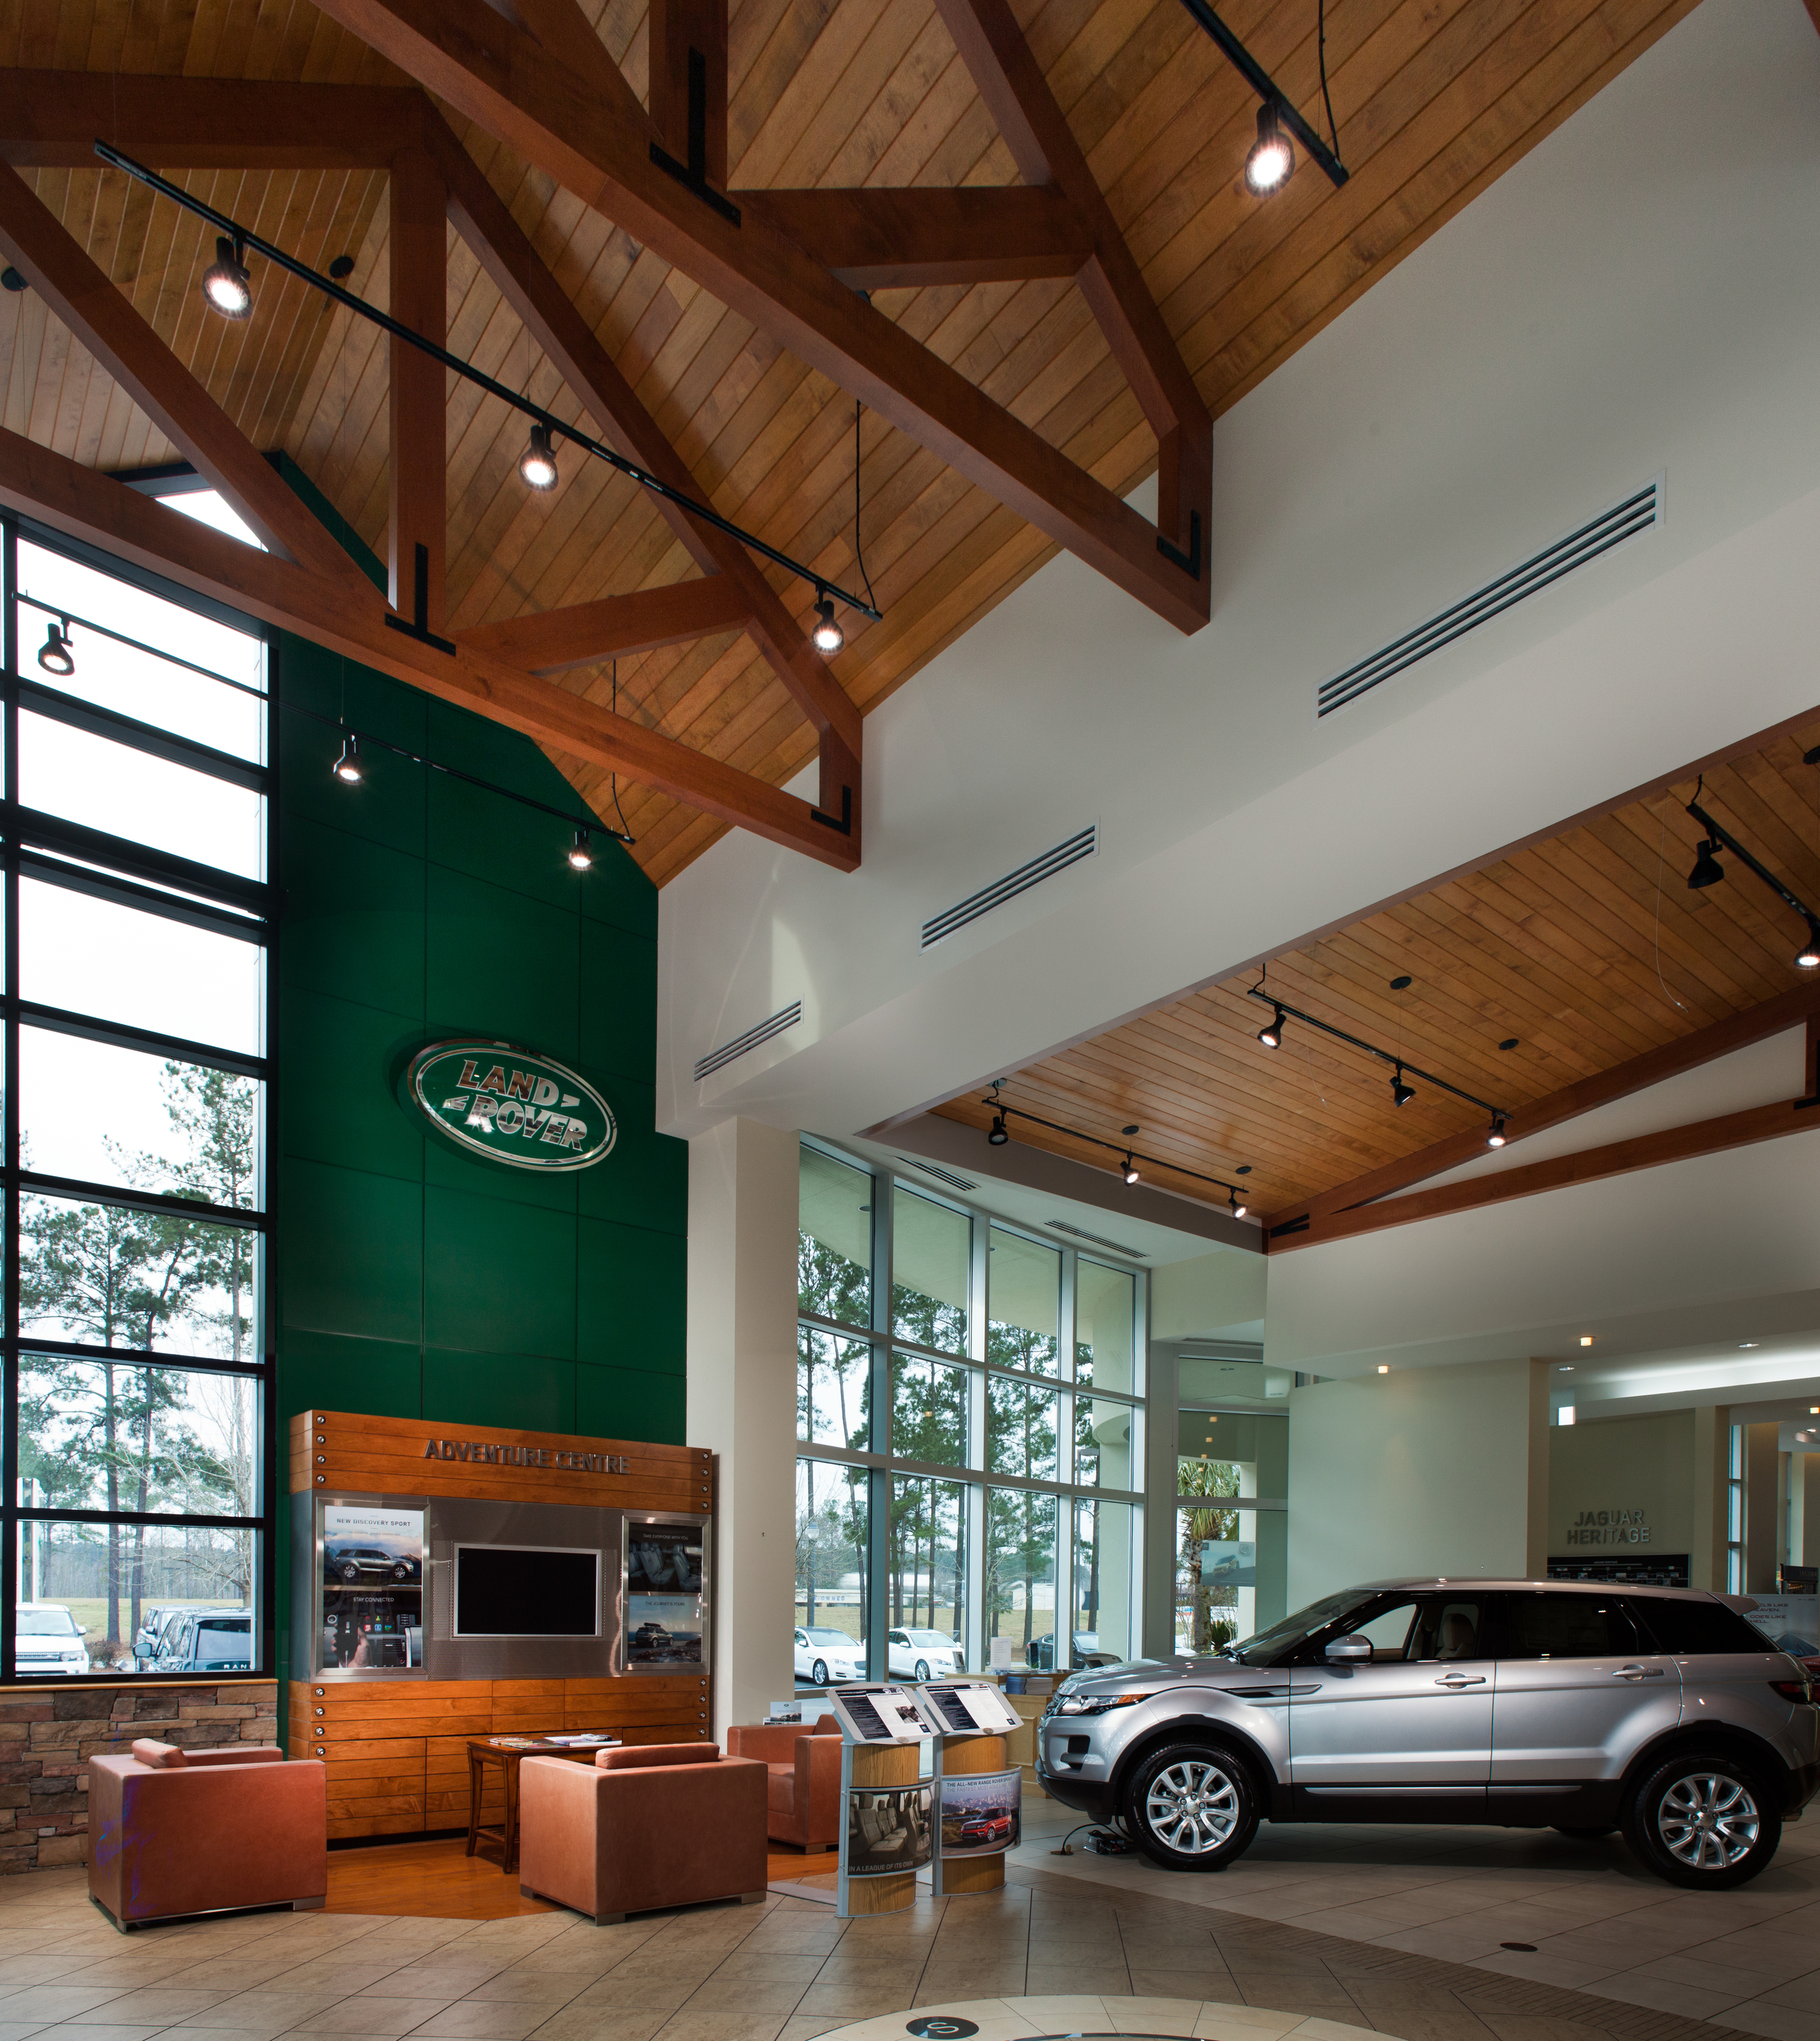 Hilton Head Range Rover interior-Edit.jpg